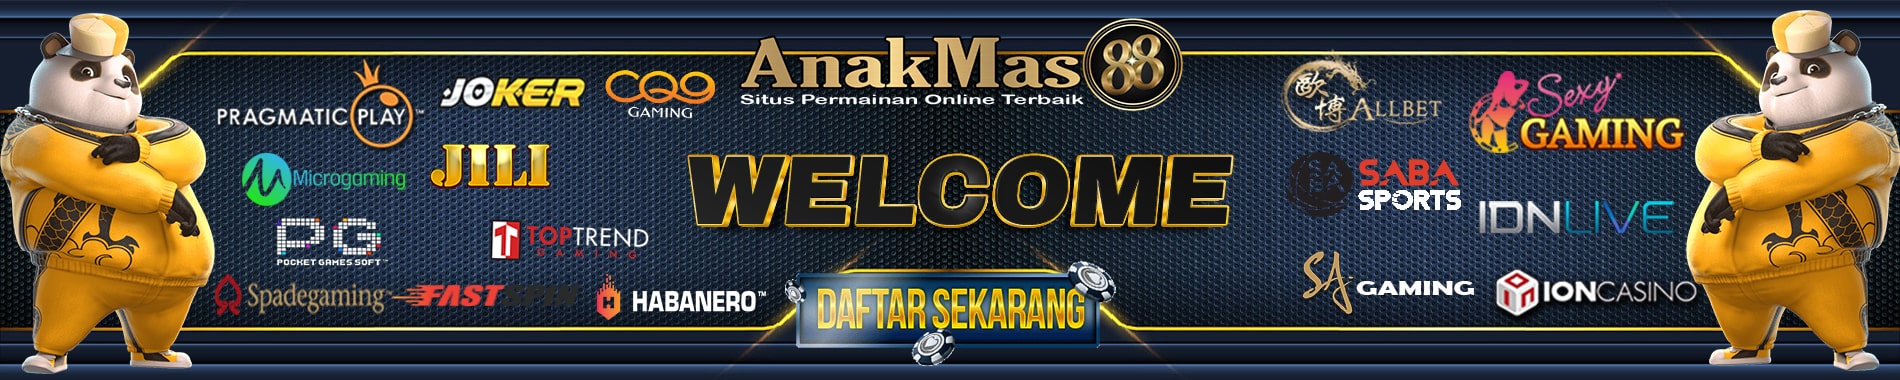 Welcome Anakmas88